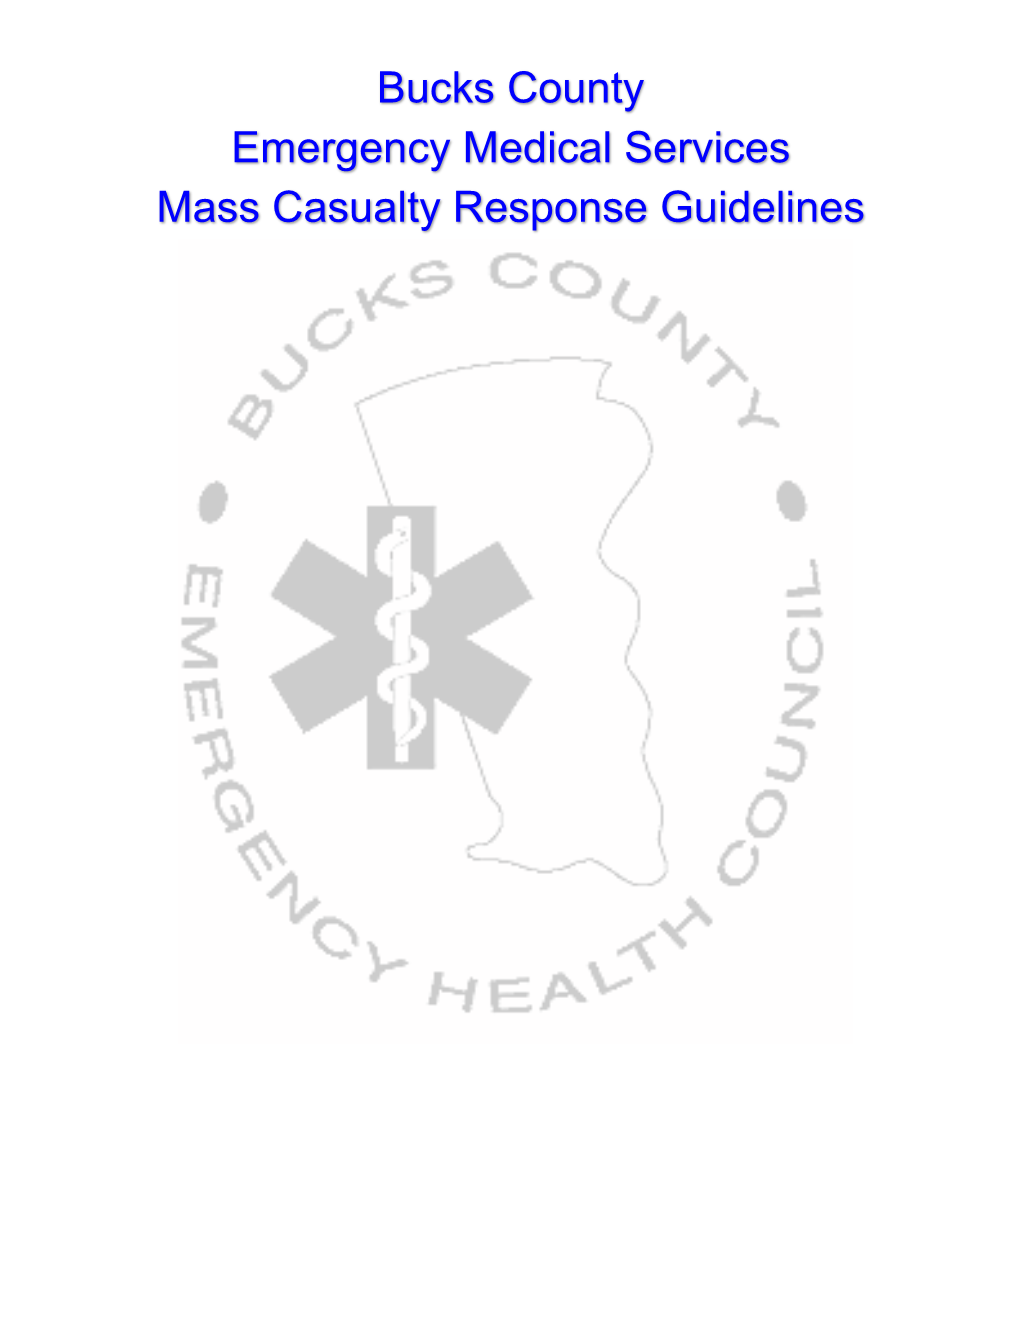 Mass Casualty Response Plan